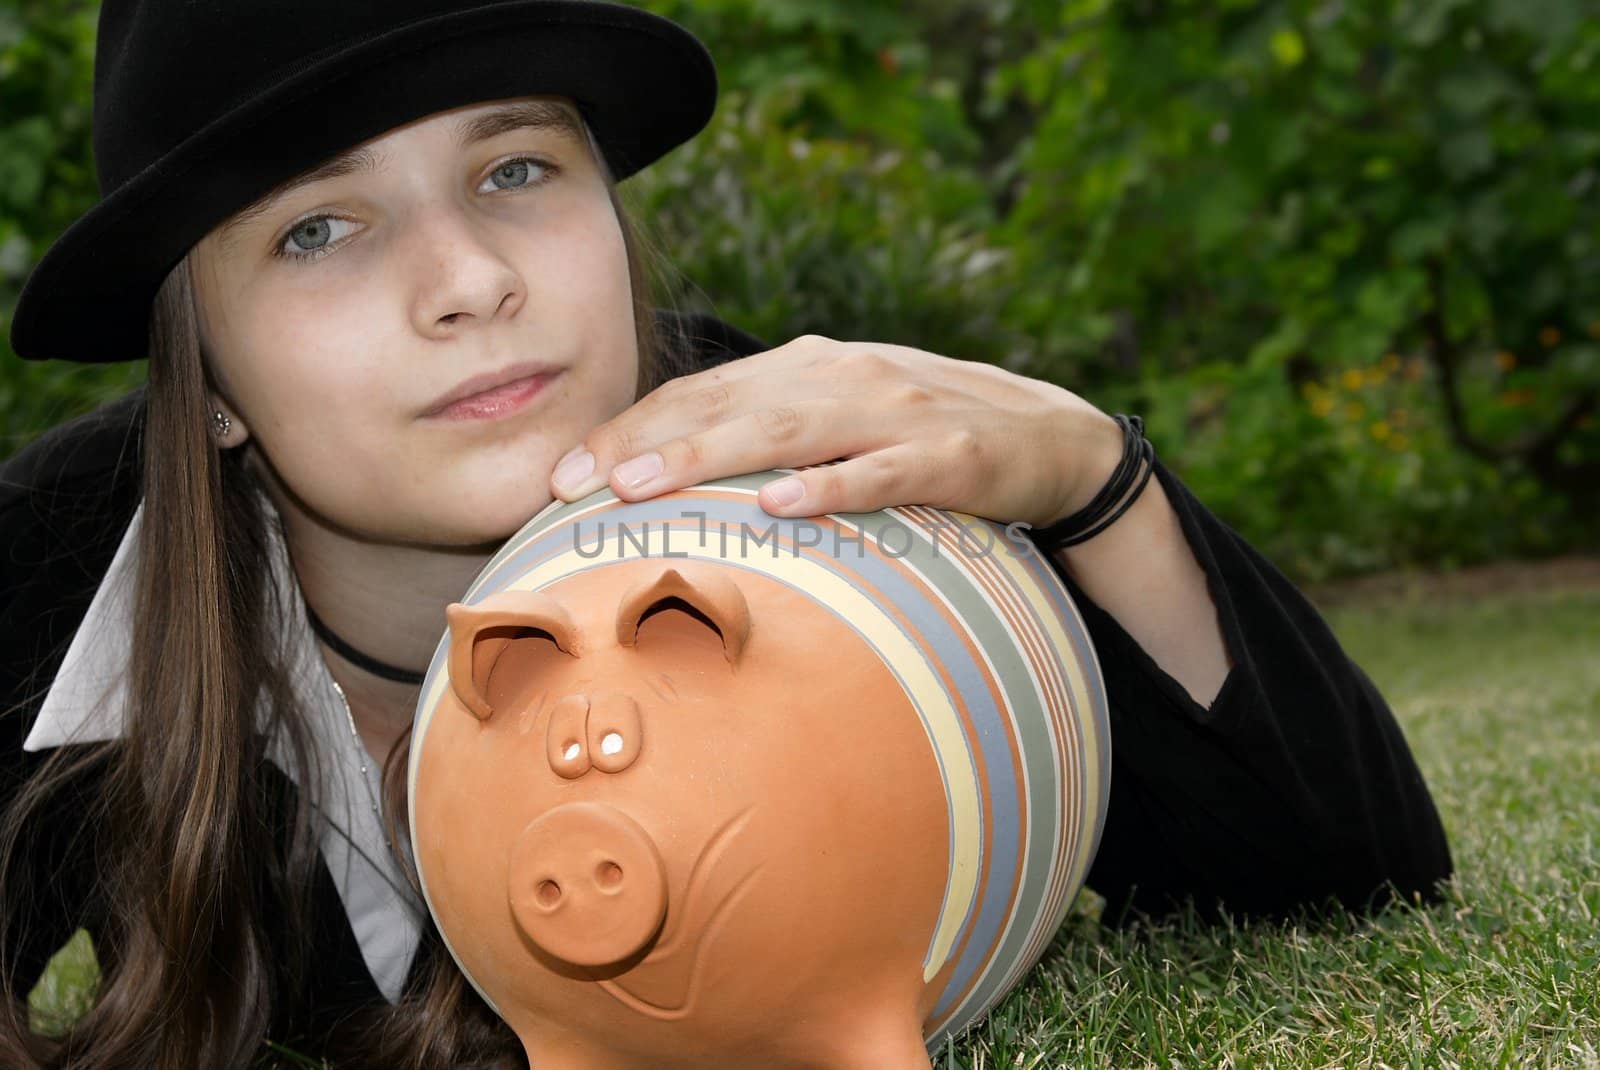 Piggy bank by Gudella